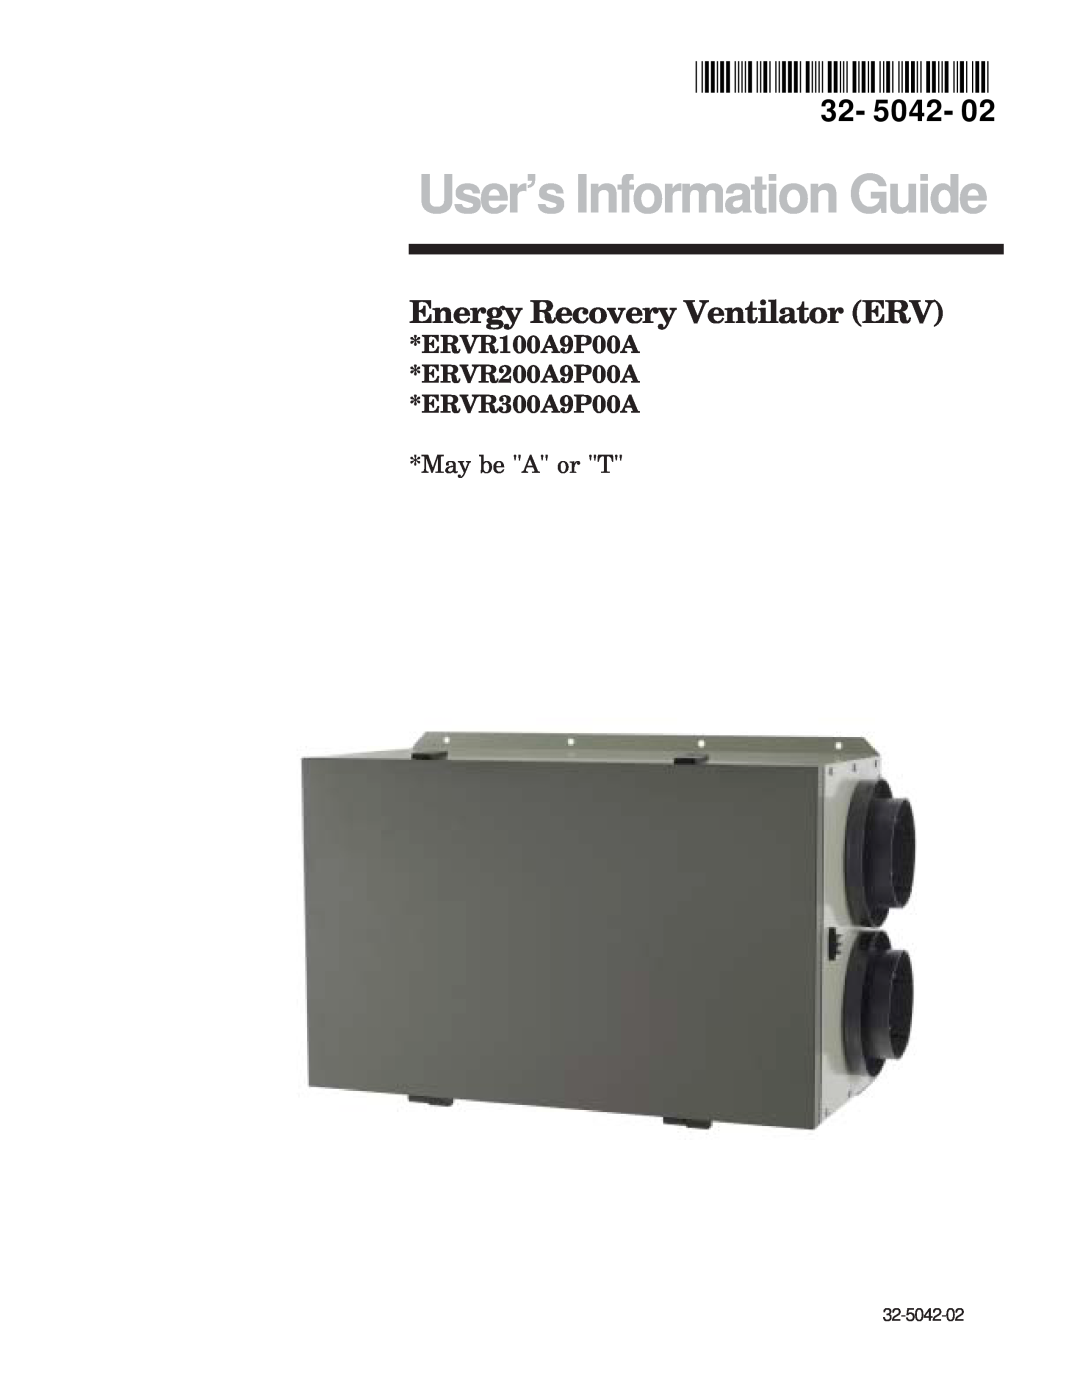 American Standard manual ERVR100A9P00A ERVR200A9P00A ERVR300A9P00A, May be A or T, User’s Information Guide 